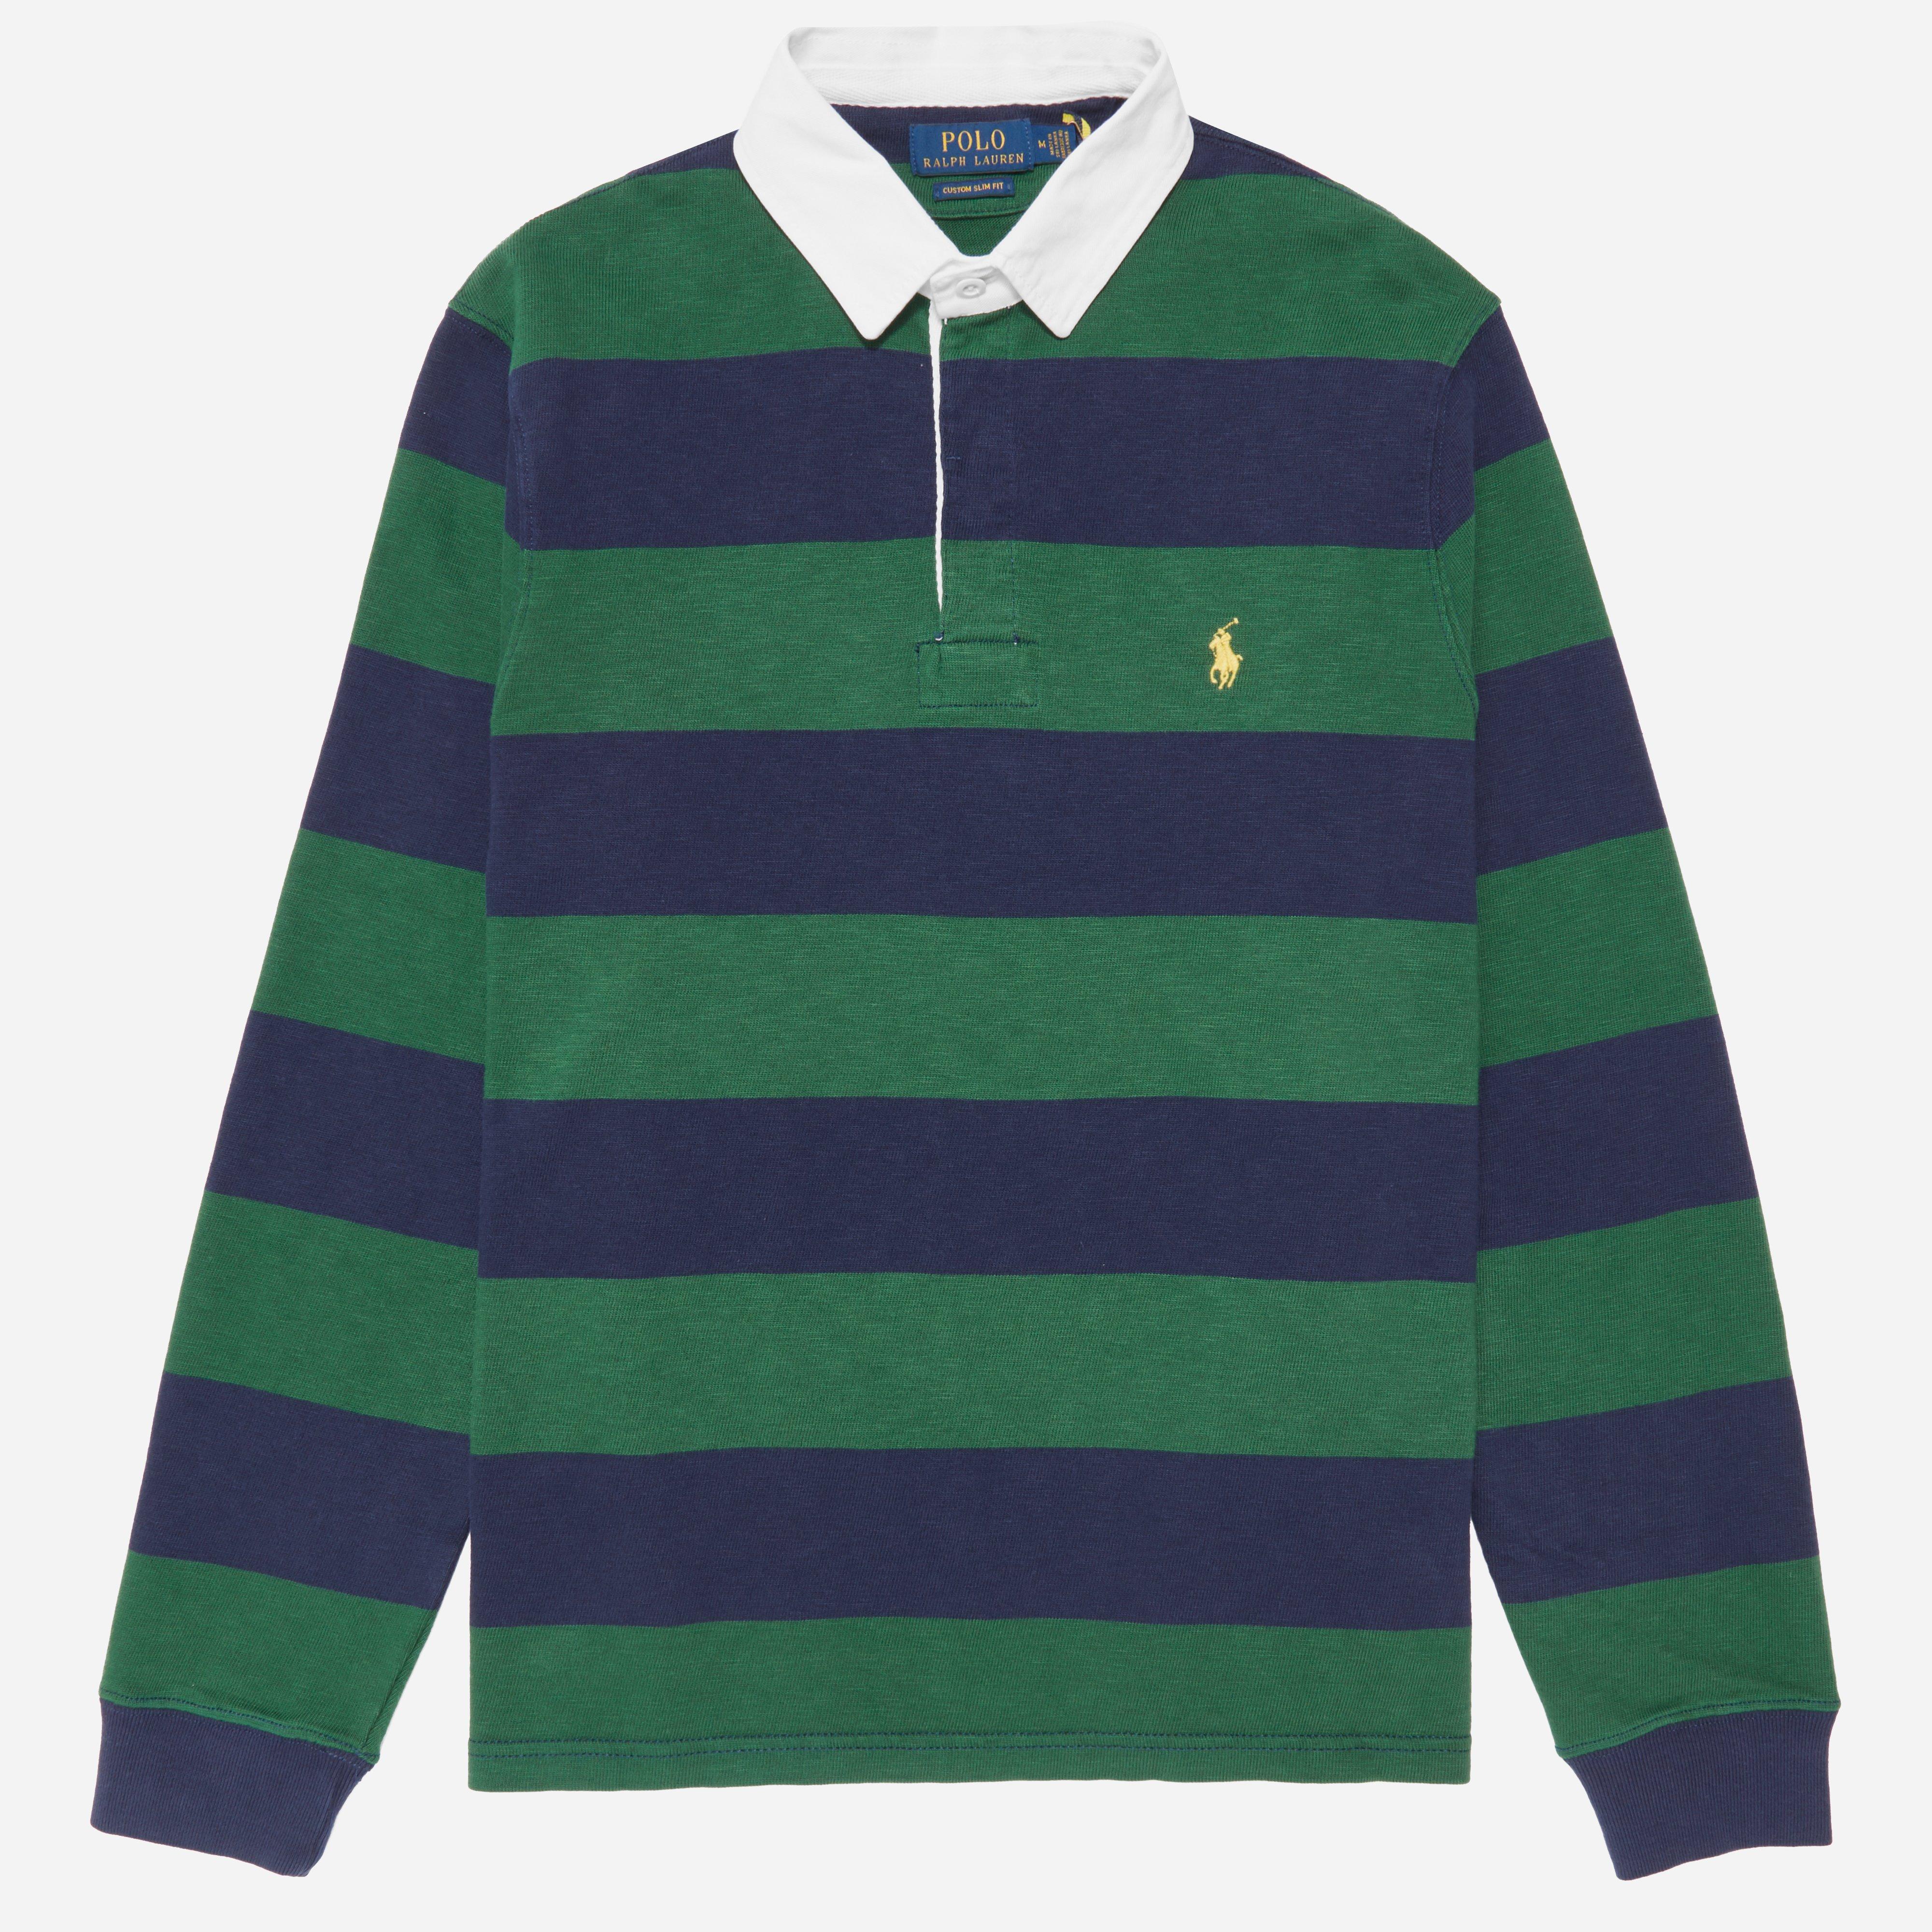 Lyst - Polo Ralph Lauren Long Sleeve Rugby Shirt in Green for Men